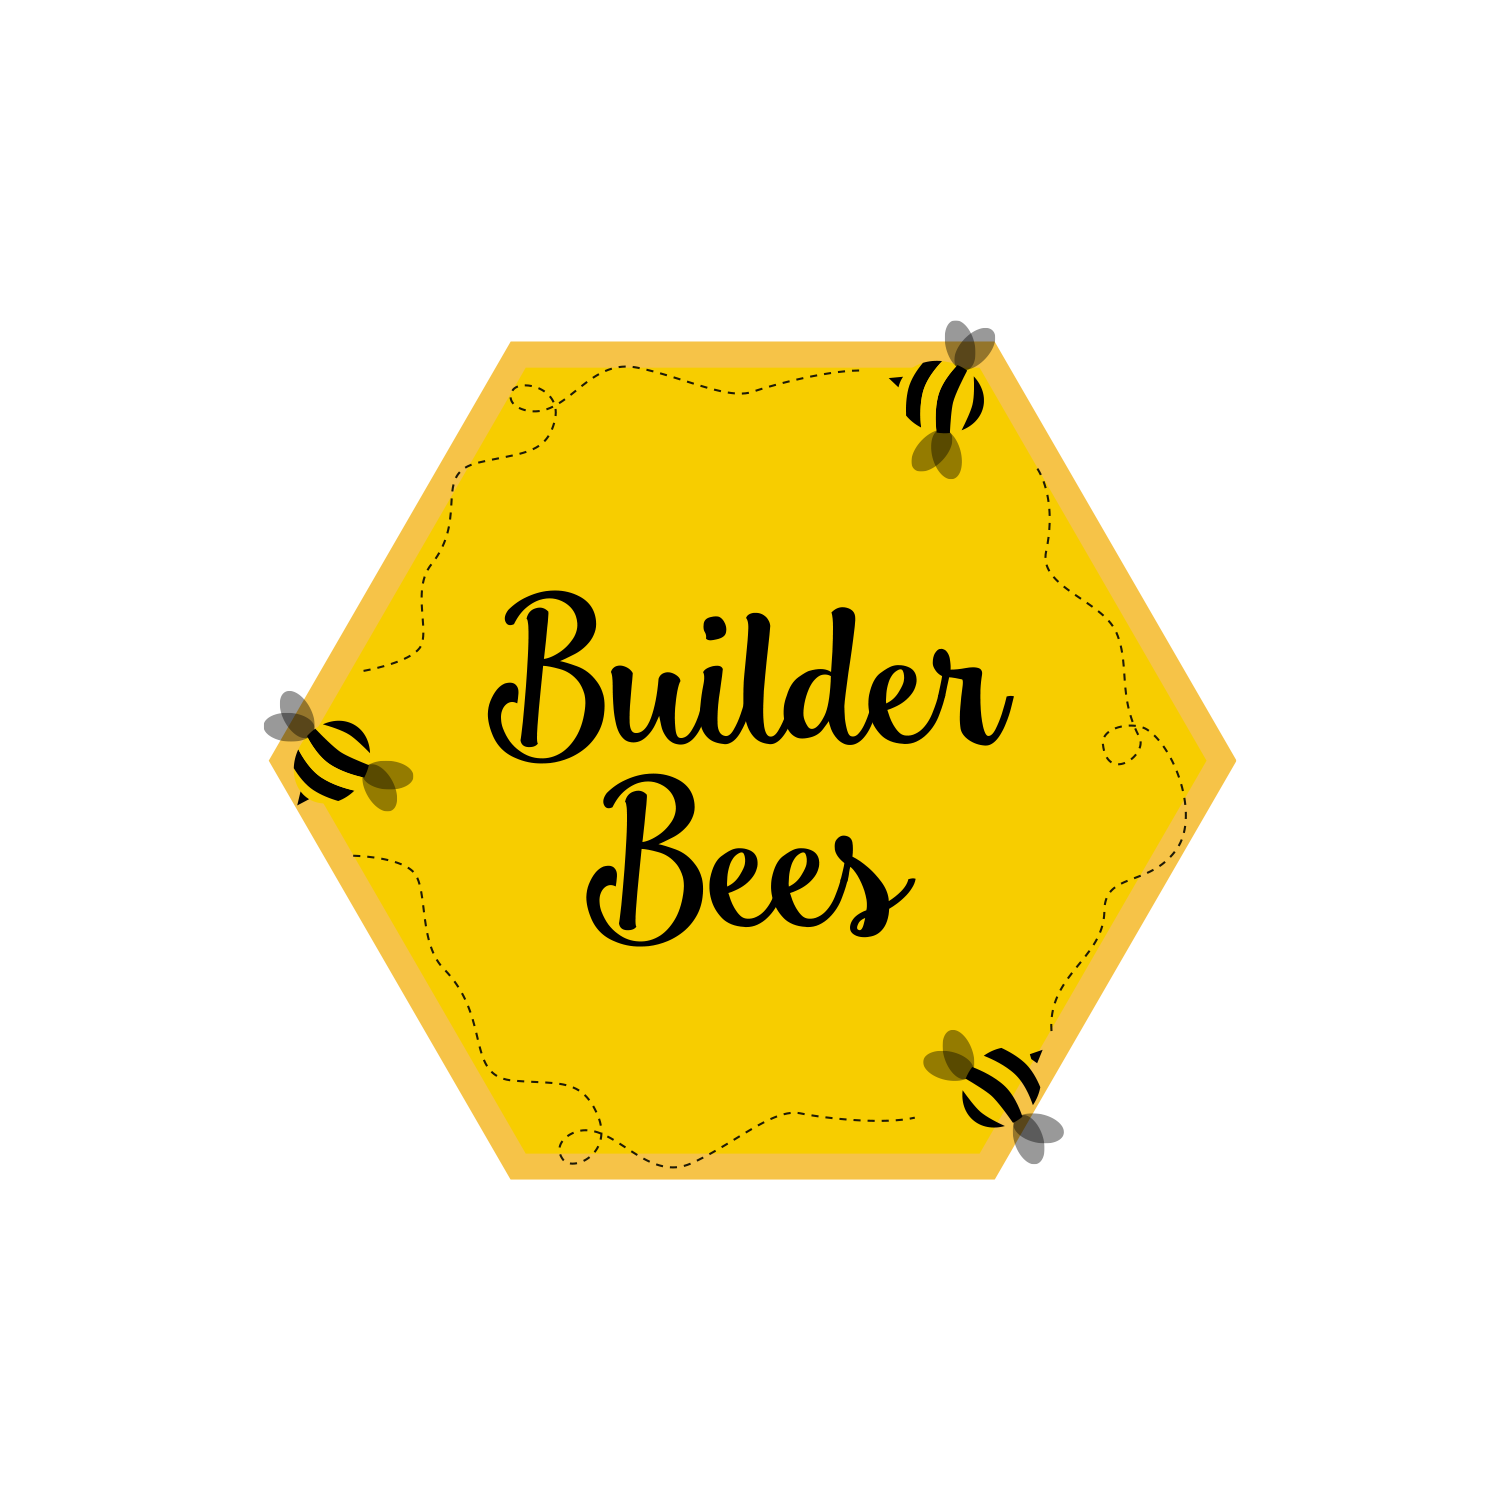 Builder bees